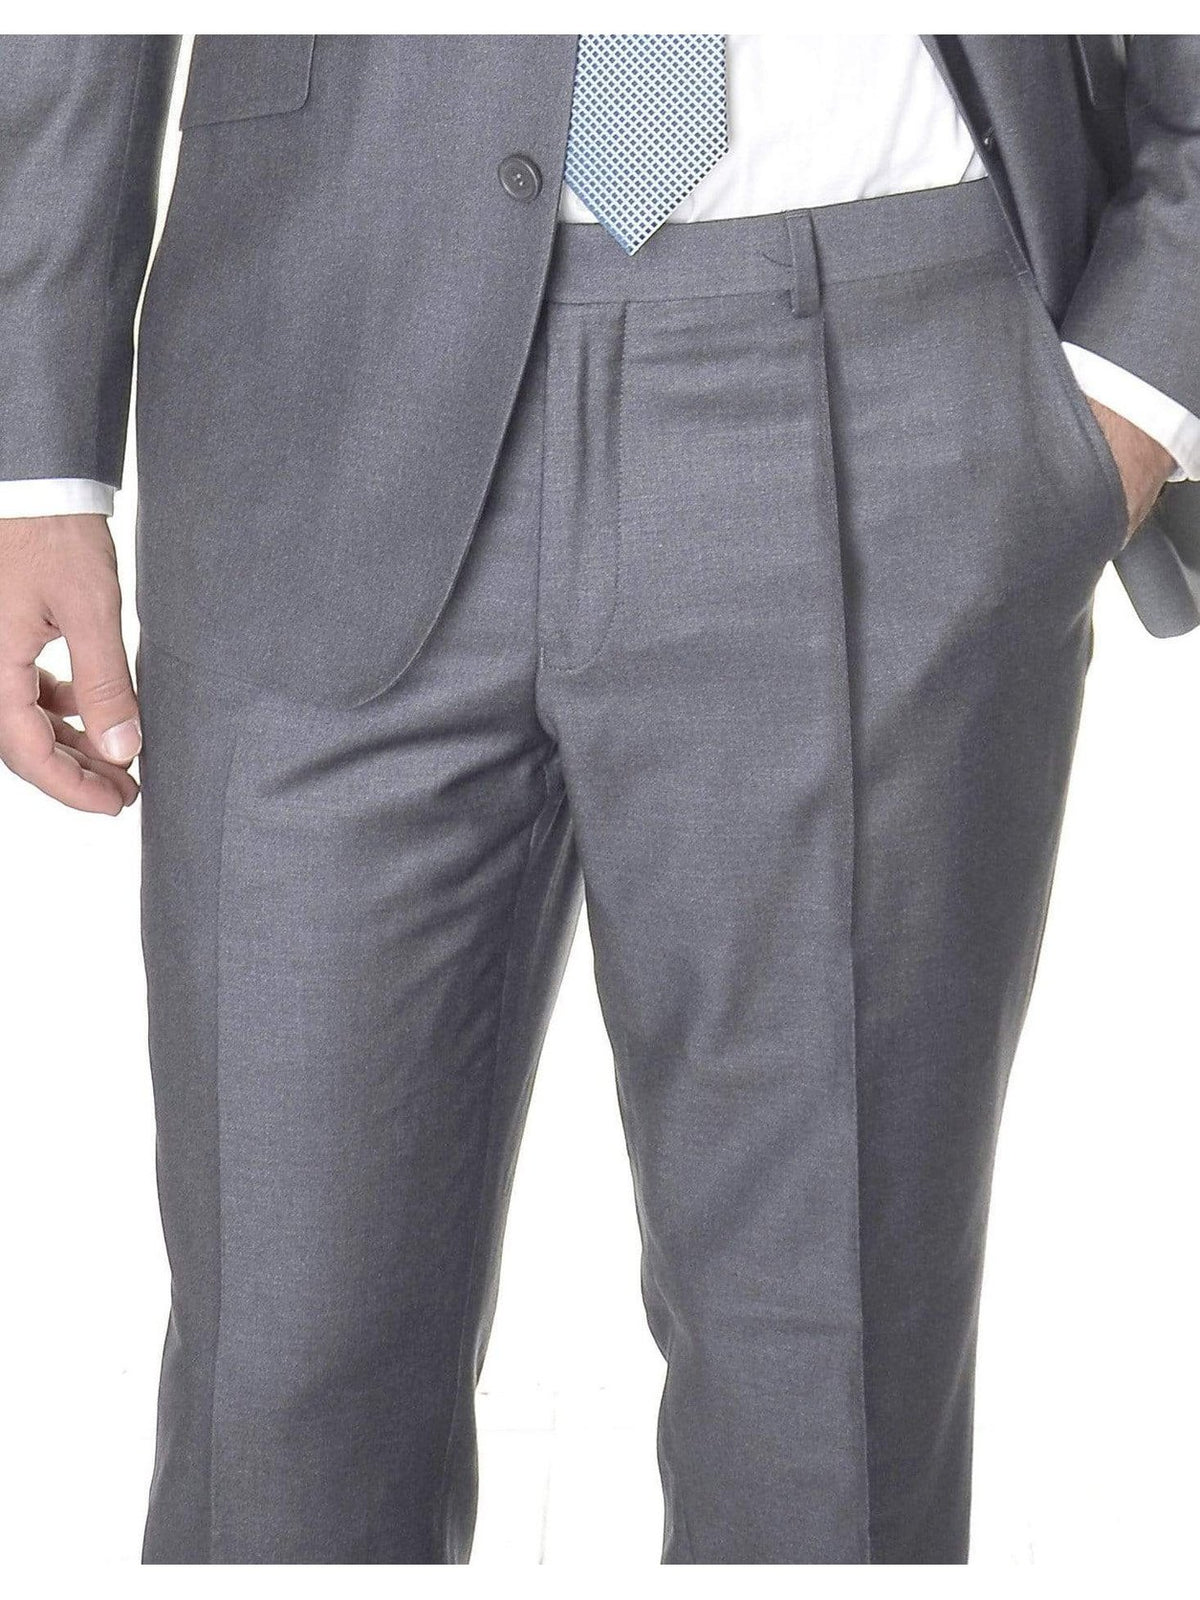 Label M PANTS 38W Mens Classic Fit Solid Light Gray Pleated Wool Dress Pants